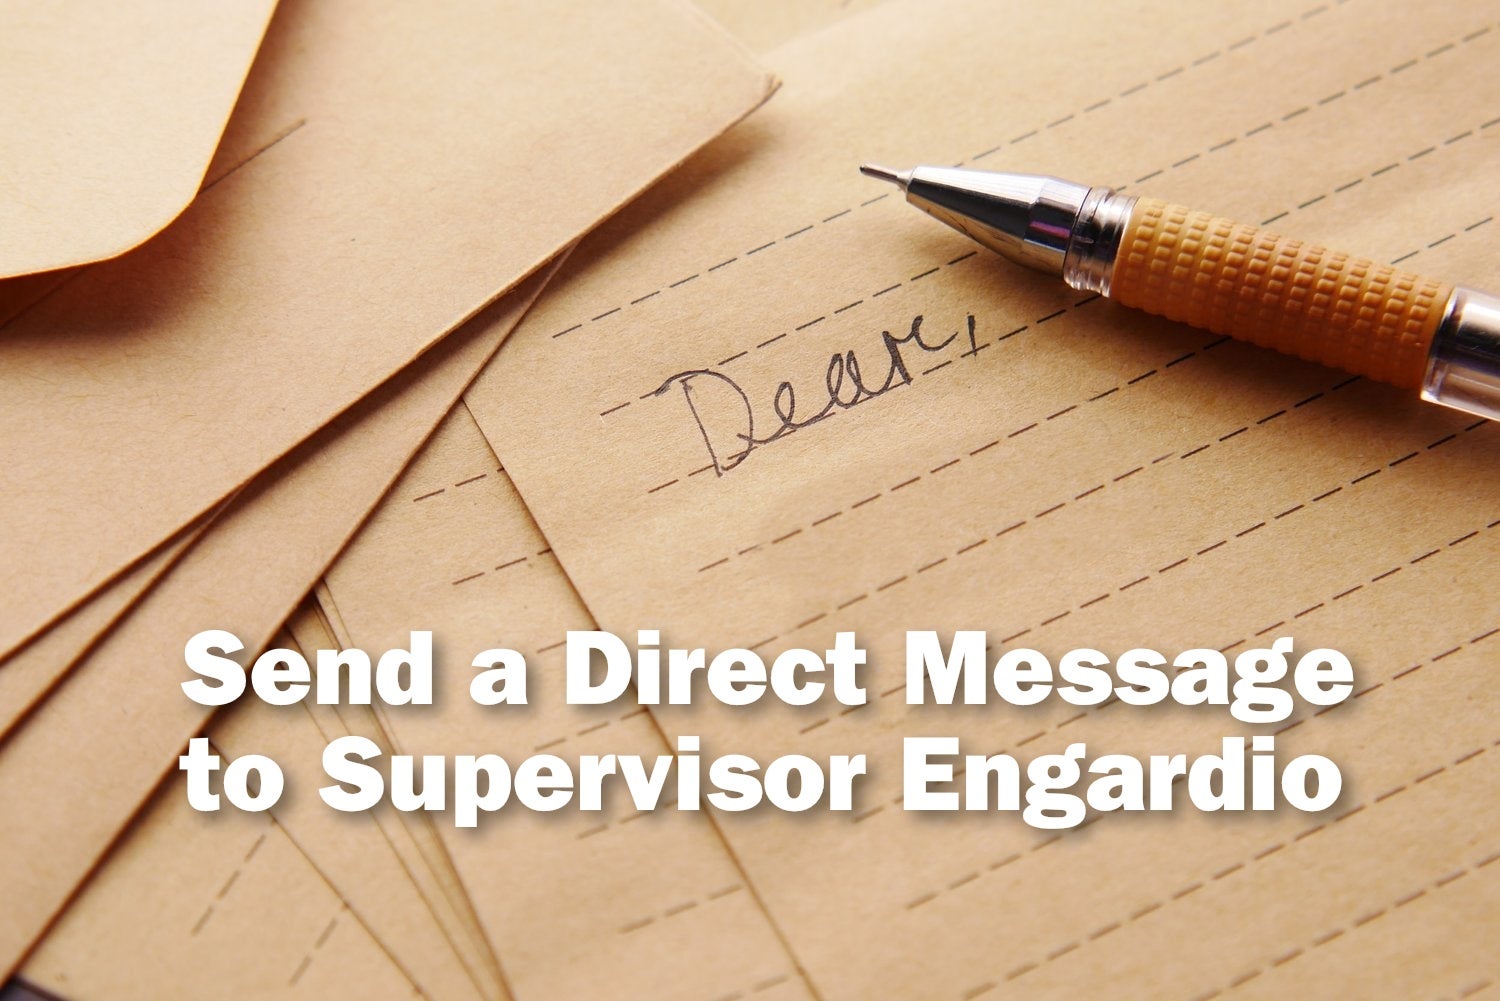 Send a Direct Message to Supervisor Engardio